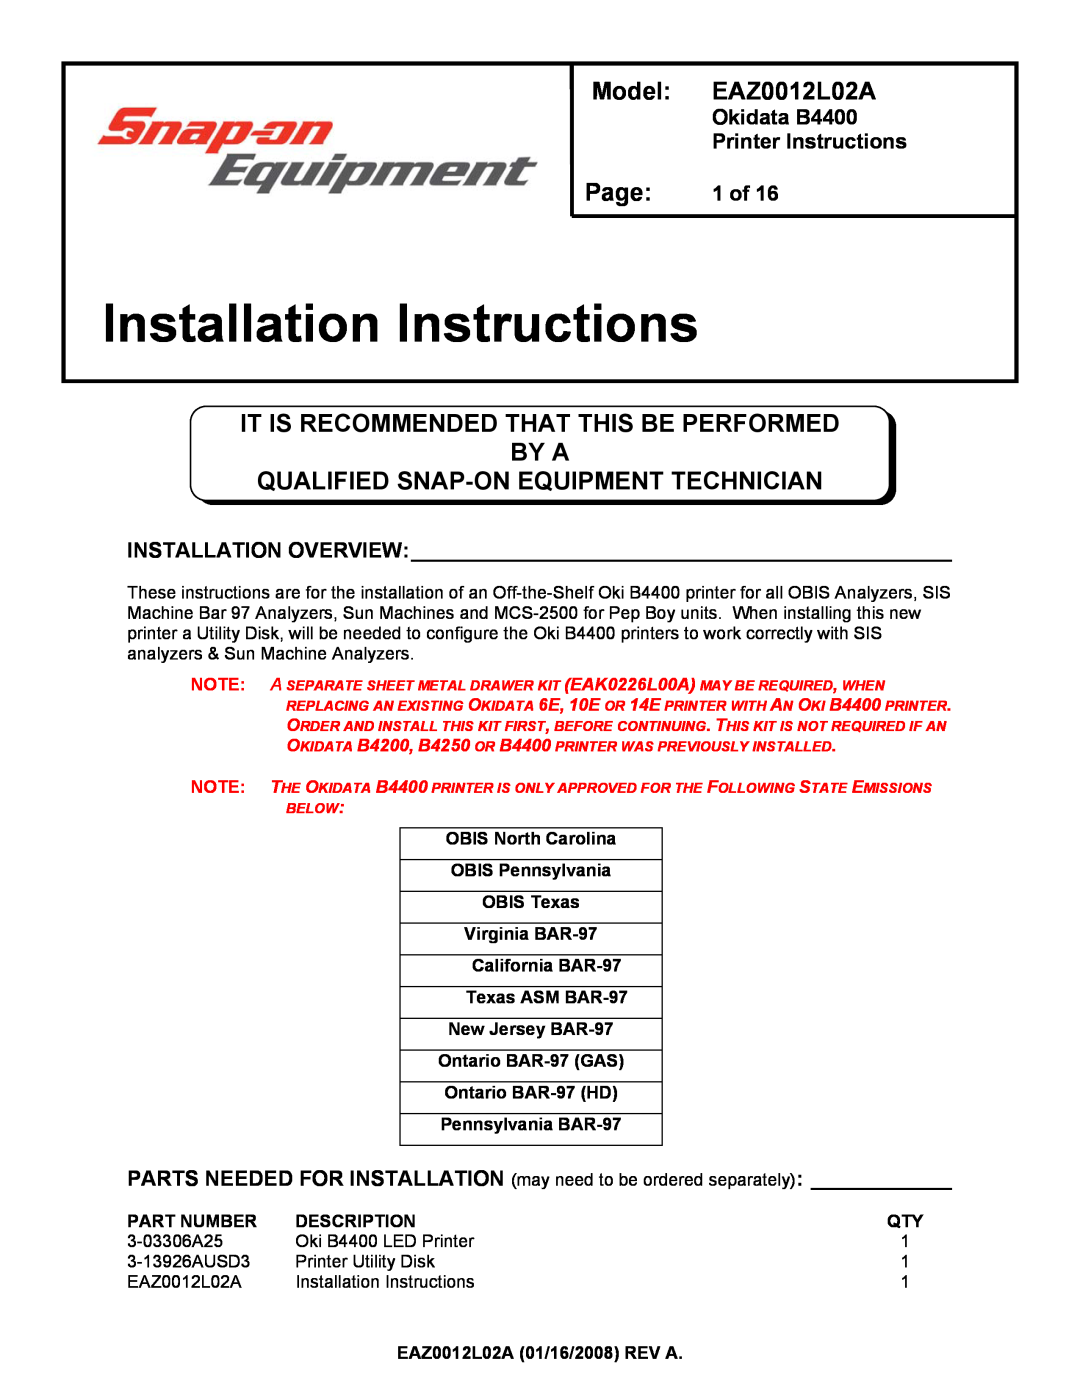 HP B4250 manual Okidata B4400 Printer Instructions, 1 of, Installation Overview, Installation Instructions, Page 